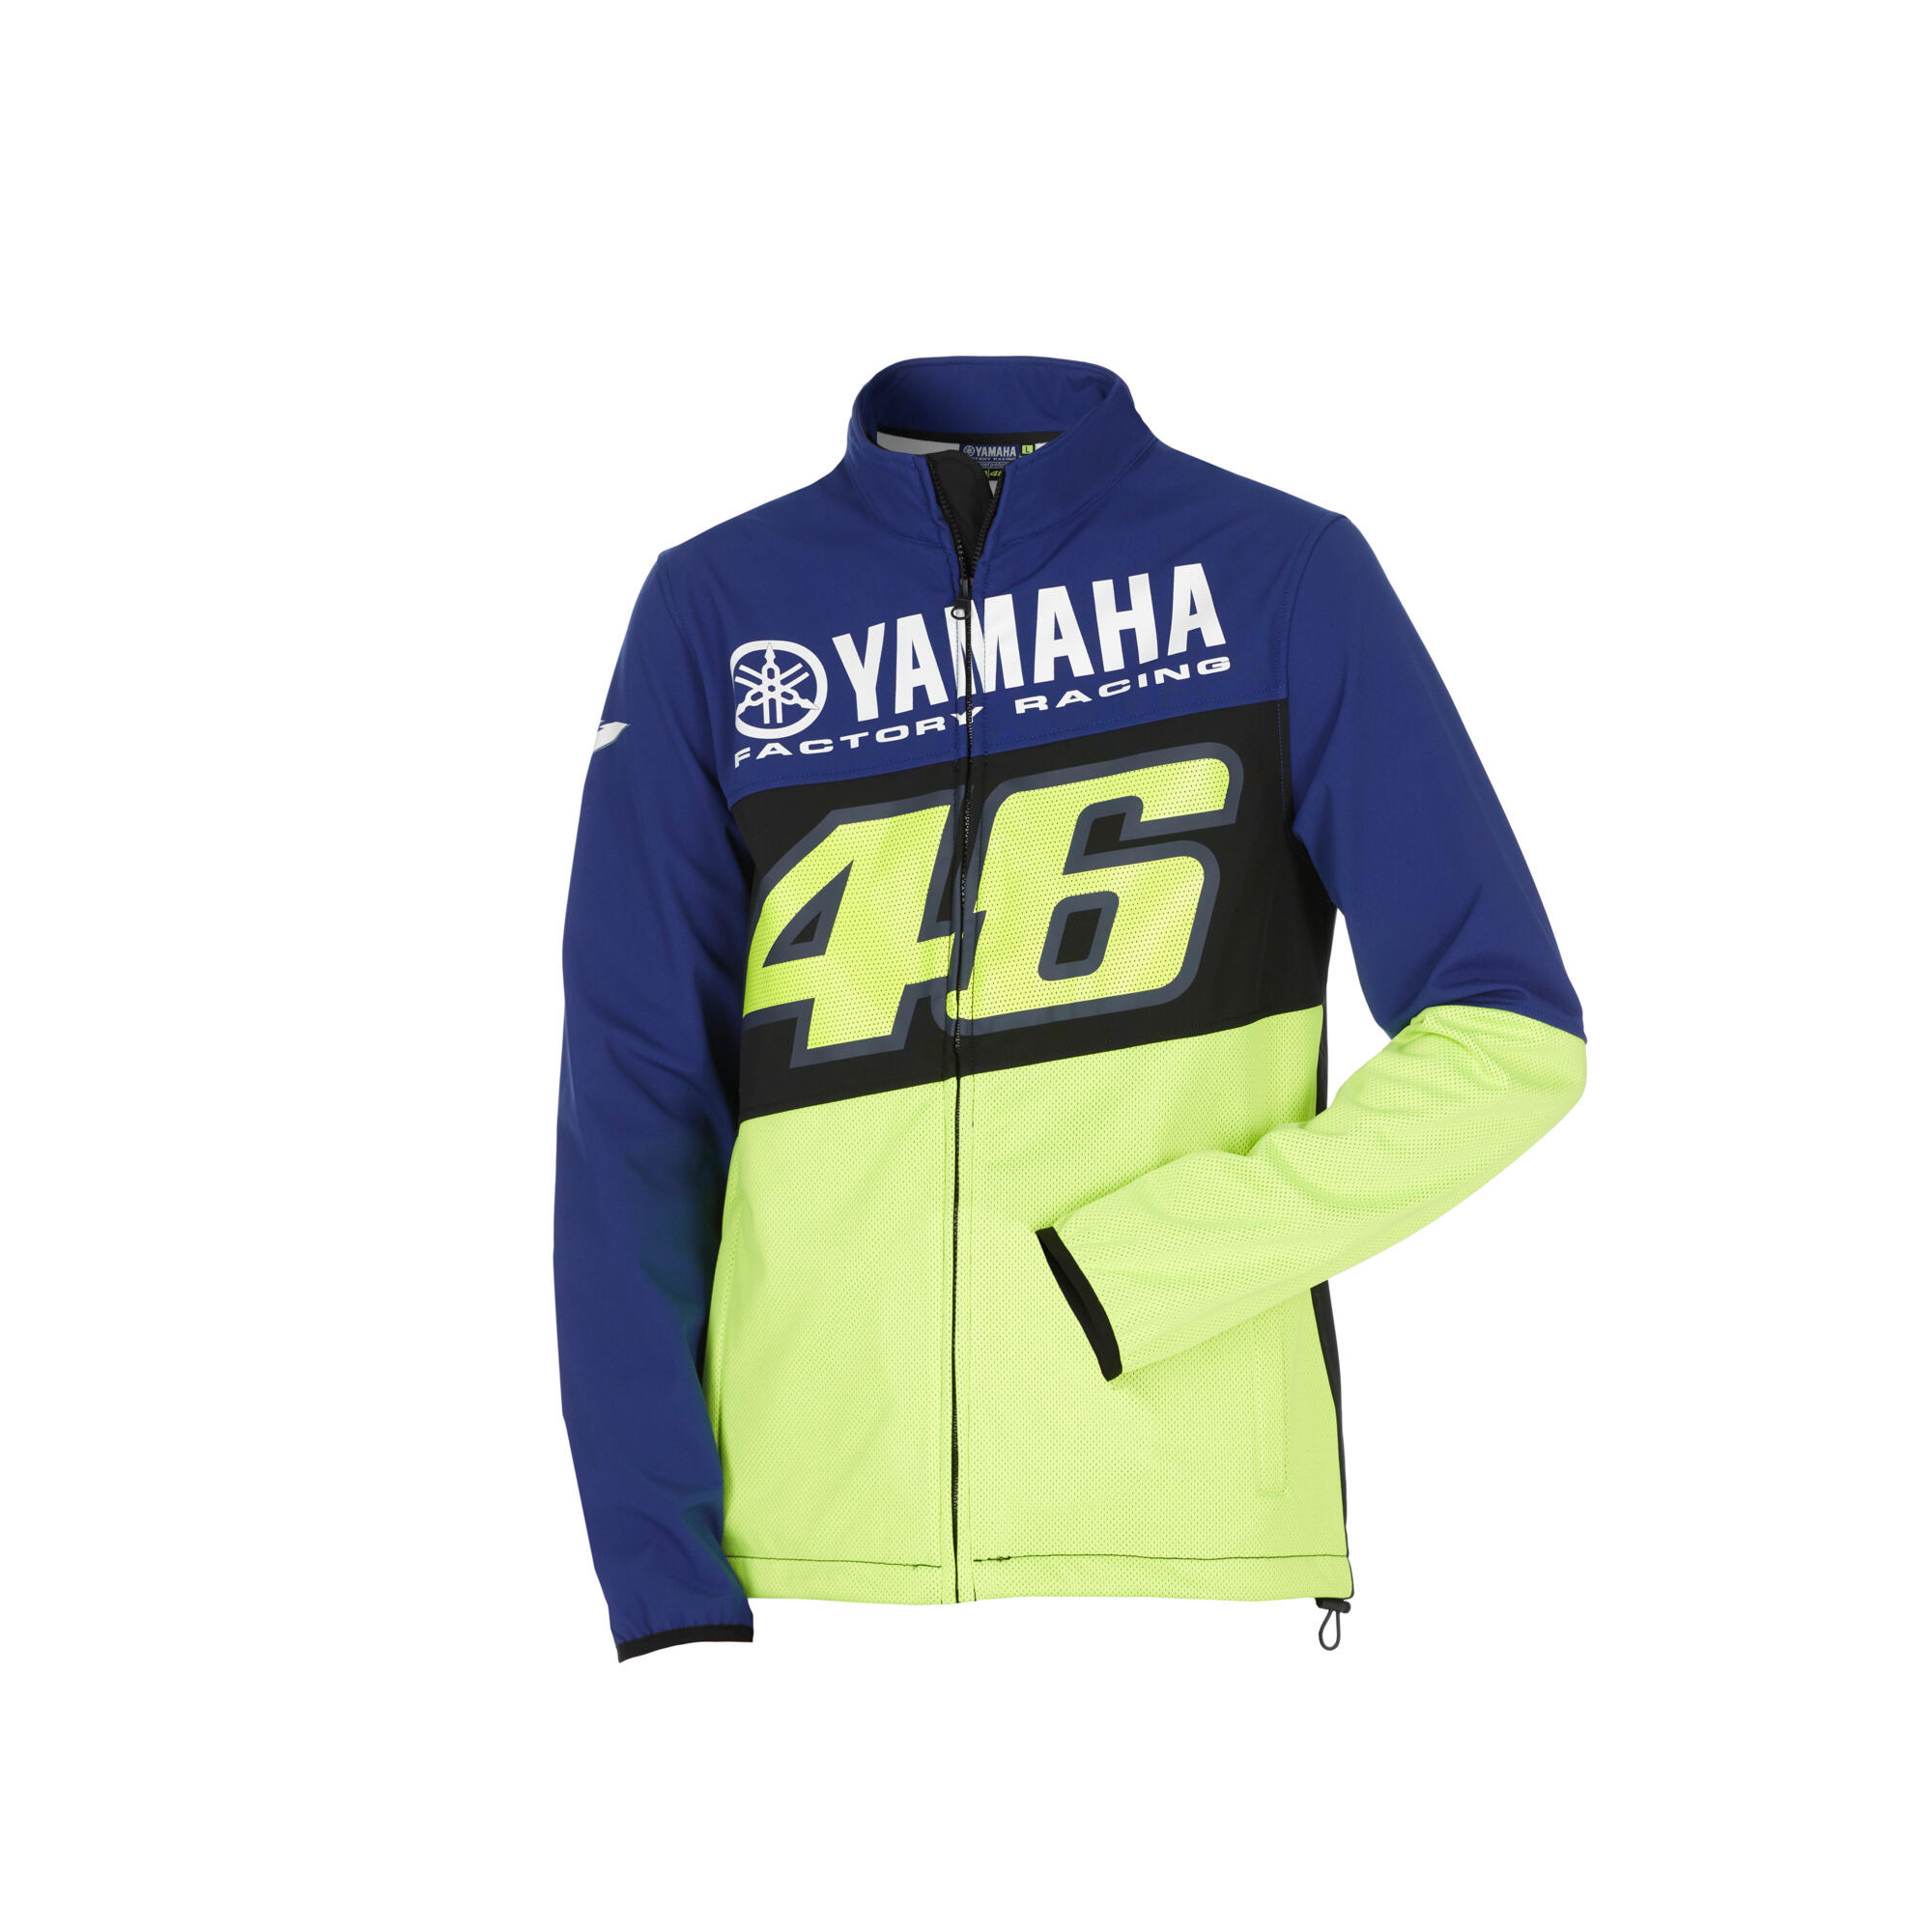 Giacca da uomo Yamaha VR46 - Abbigliamento & Merchandise - Yamaha Motor